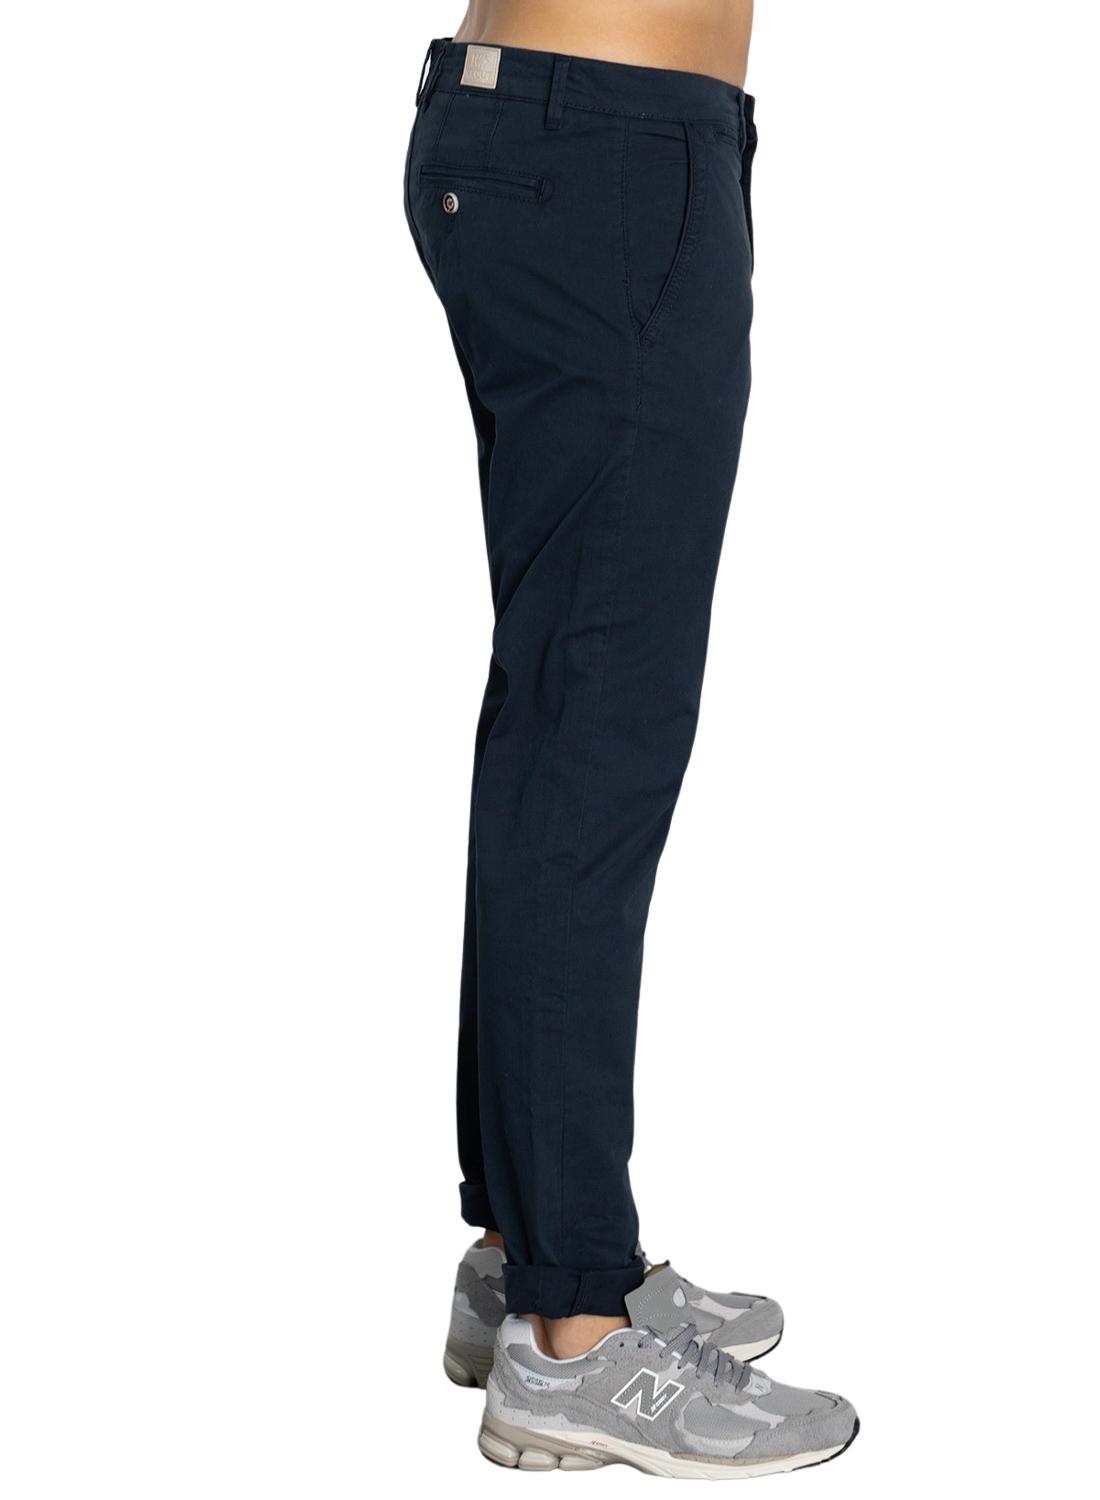 Pantaloni Klout Chino Basic Blu Navy per Uomo